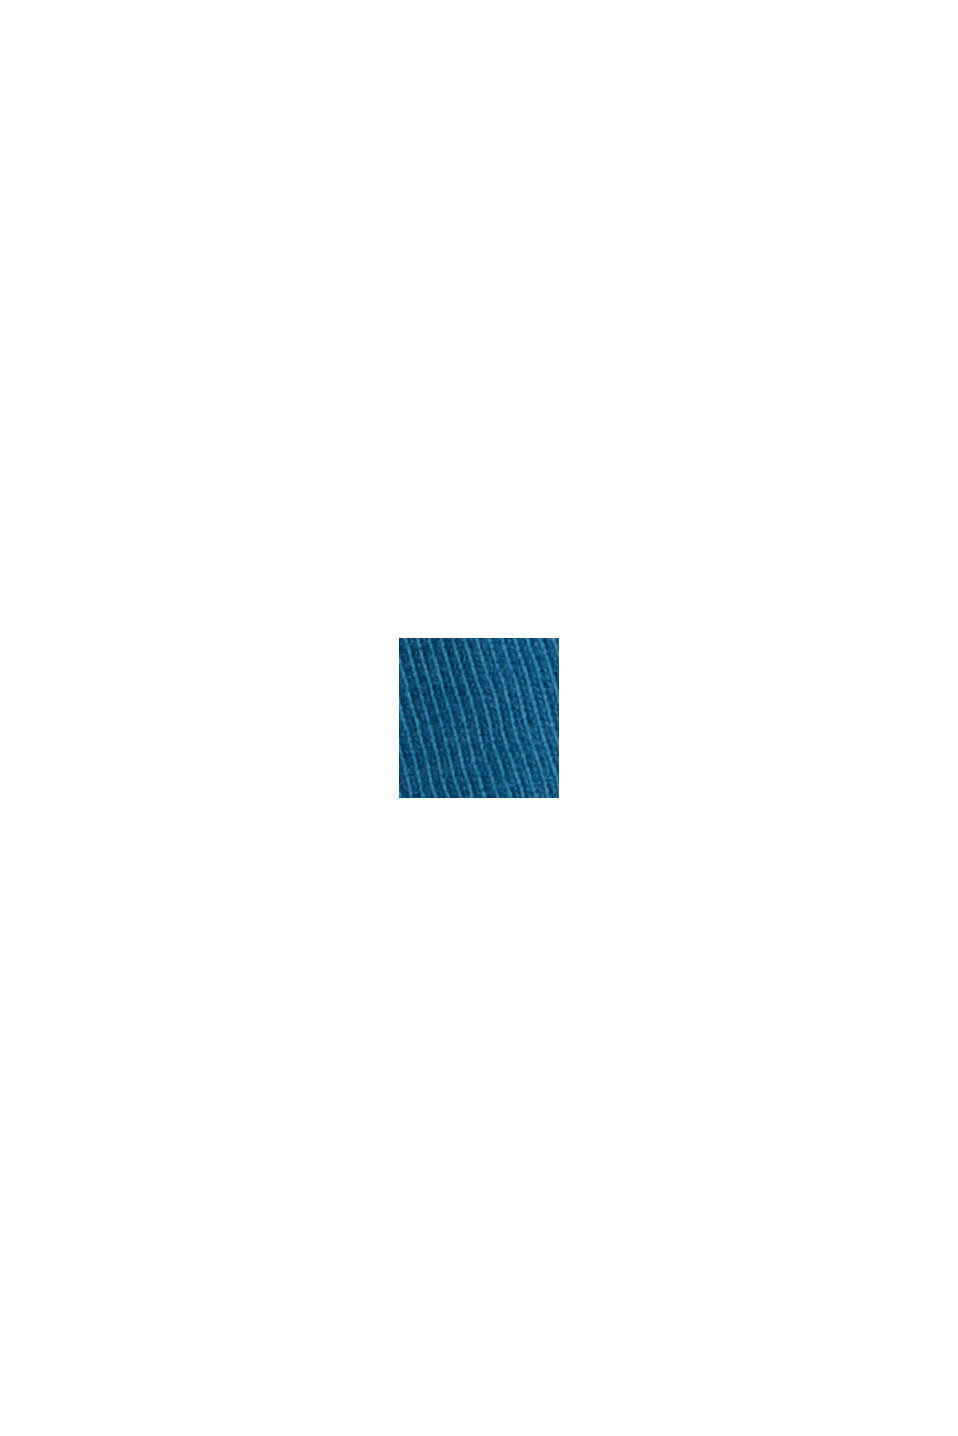 Jersey longsleeve van biologisch katoen, PETROL BLUE, swatch